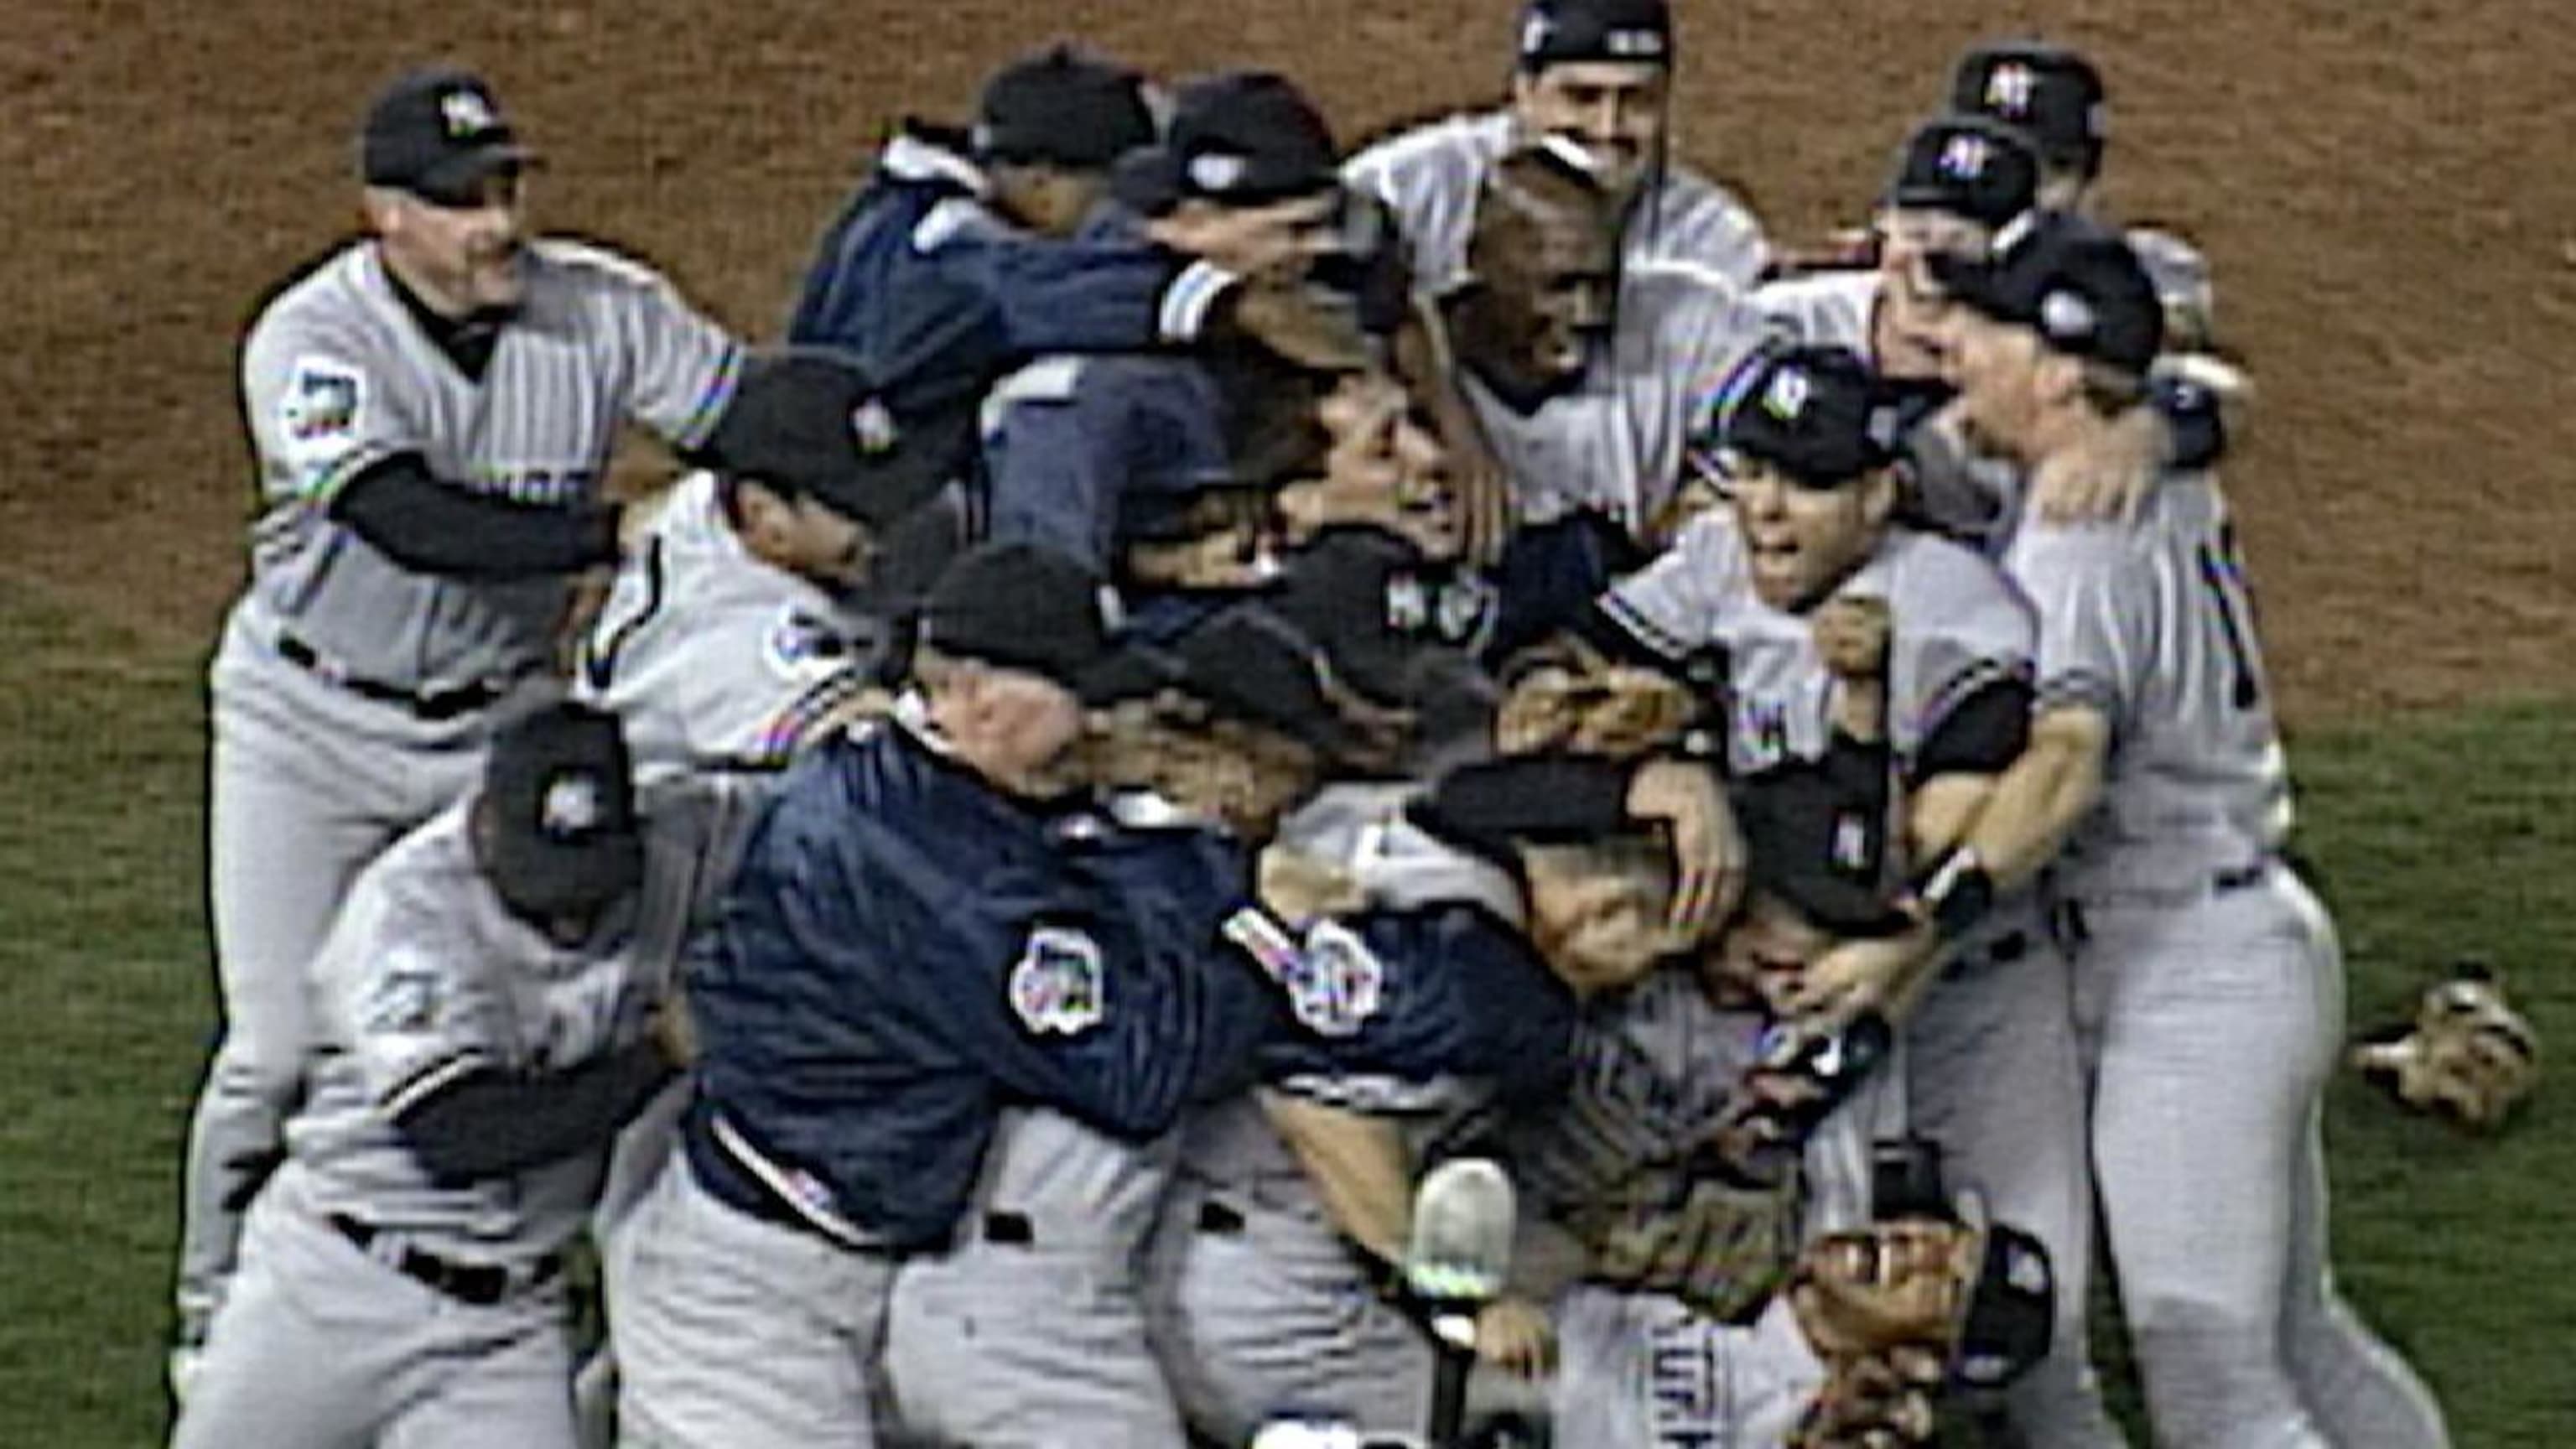 Mariano Rivera 1998 World Series Iconic Legendary Mitchell & Ness